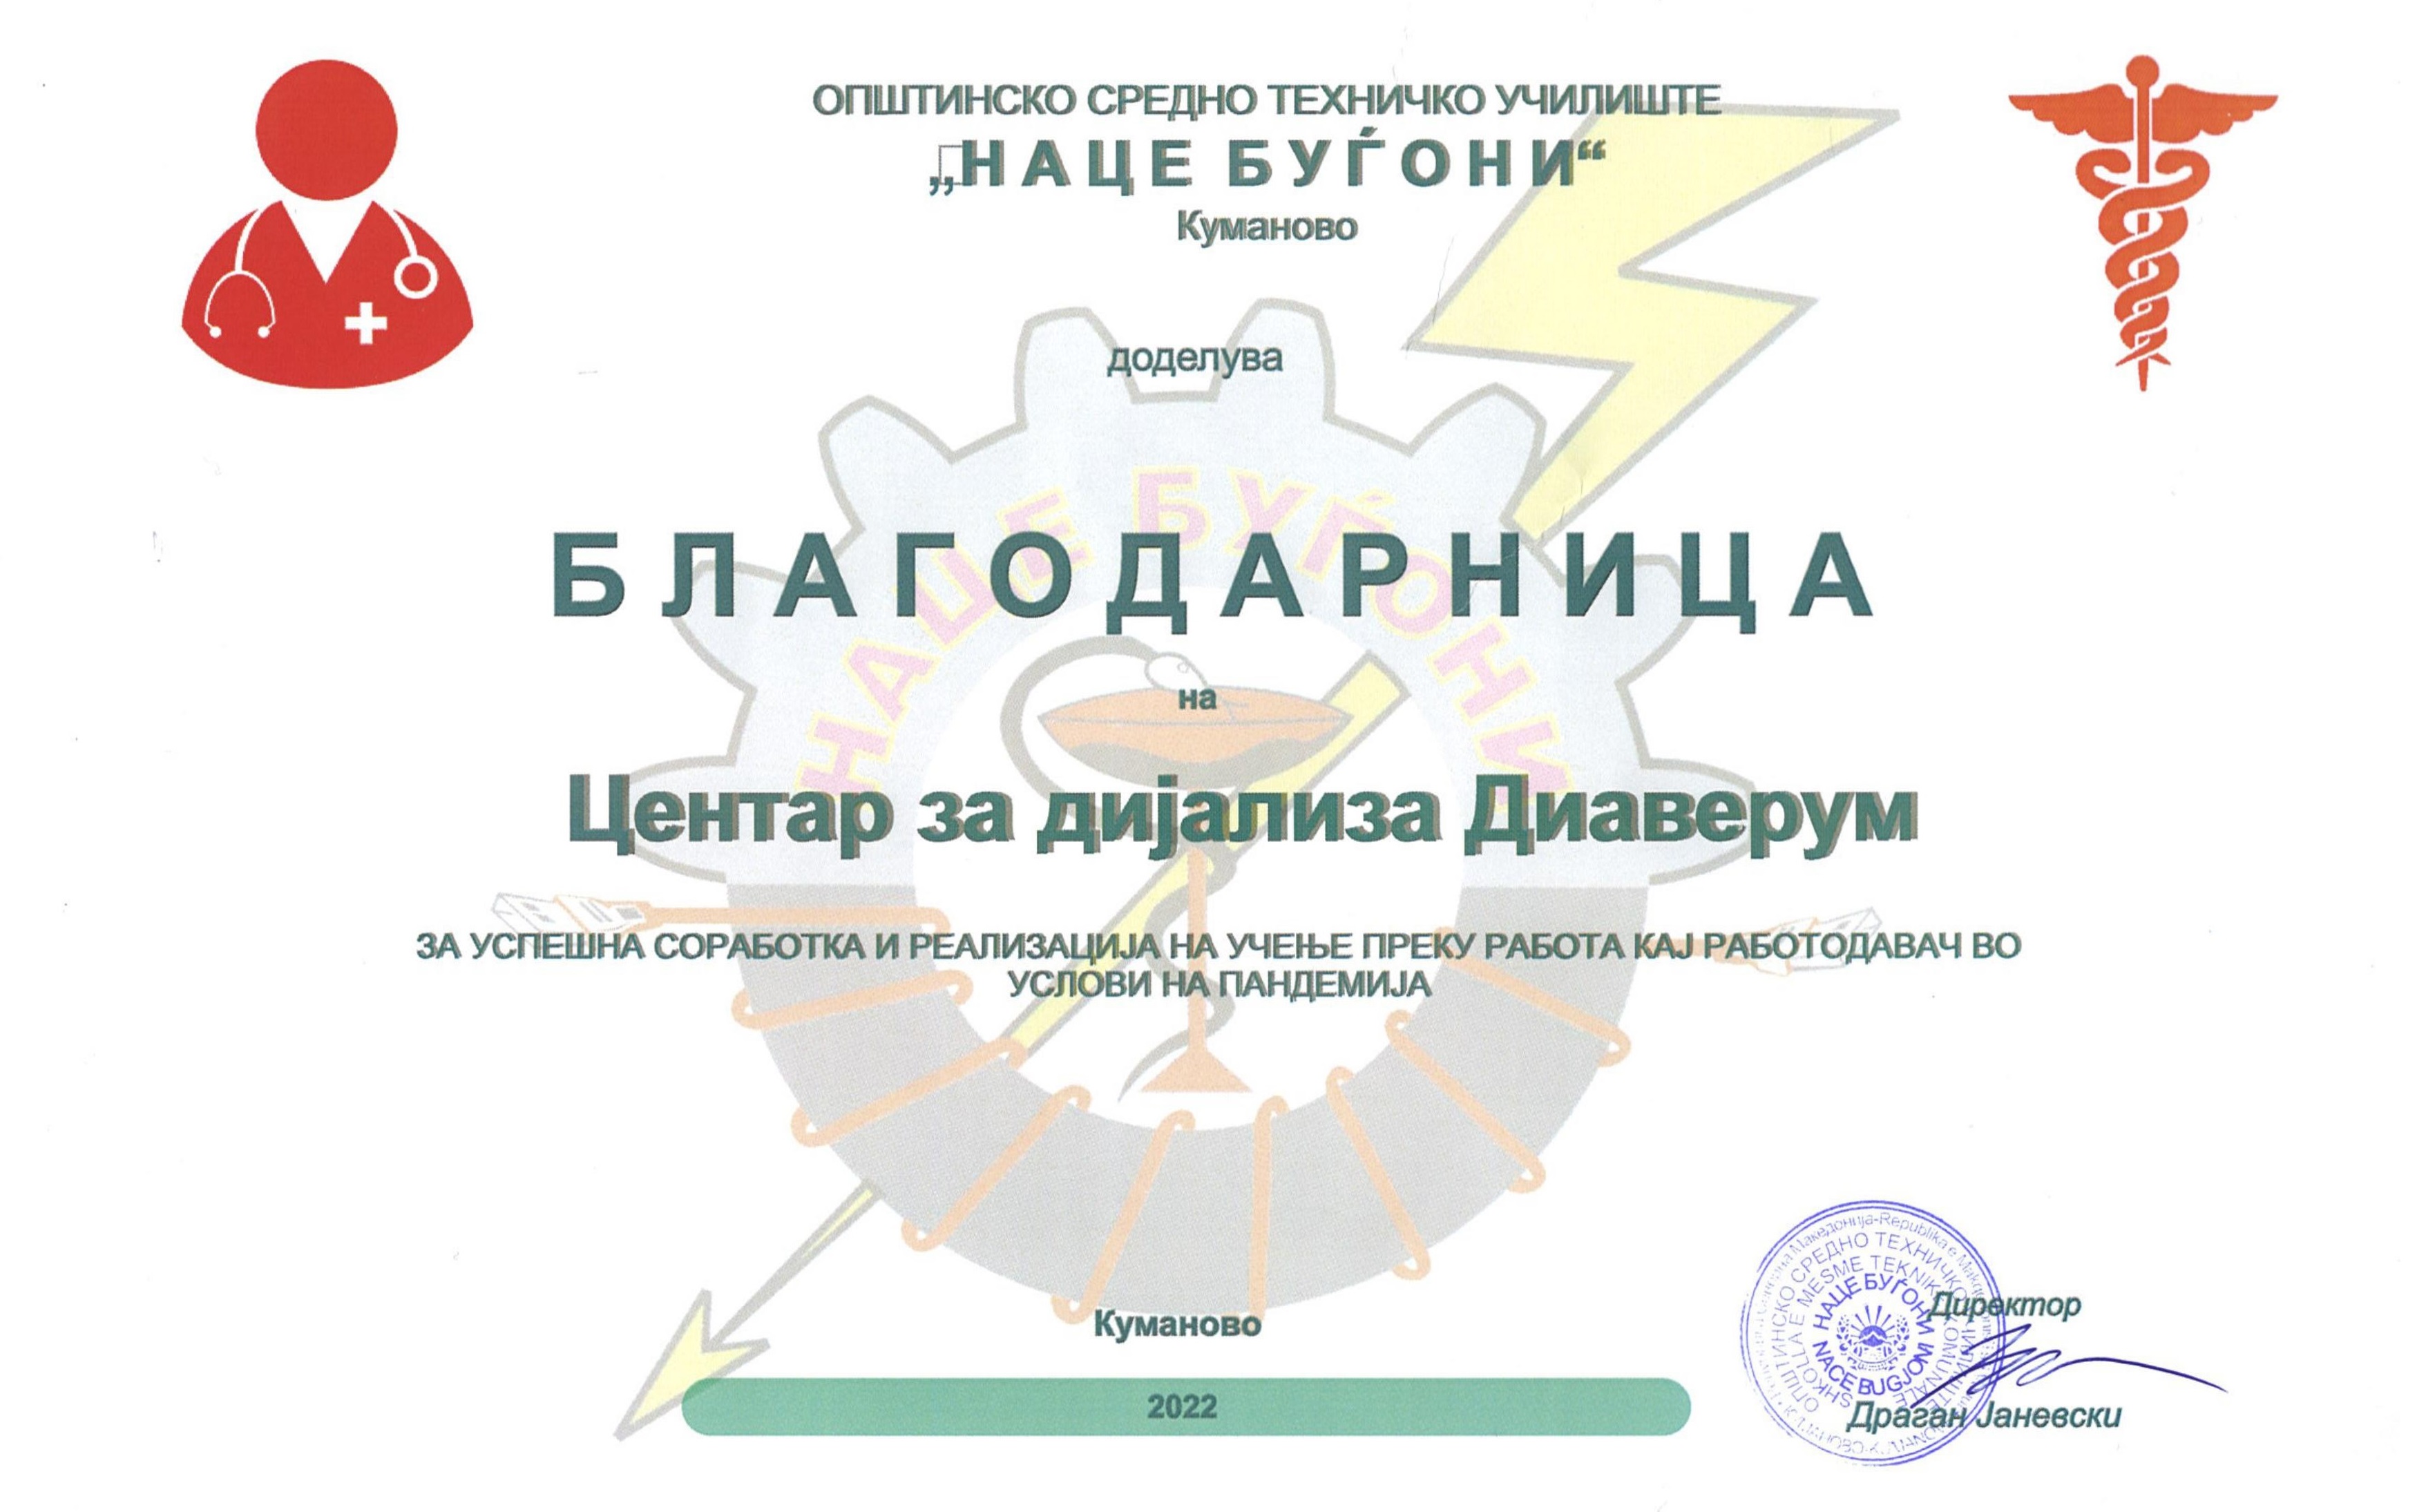 6.1 Article NM - Collaboration with Kumanovo nurse school photo cropped.jpg